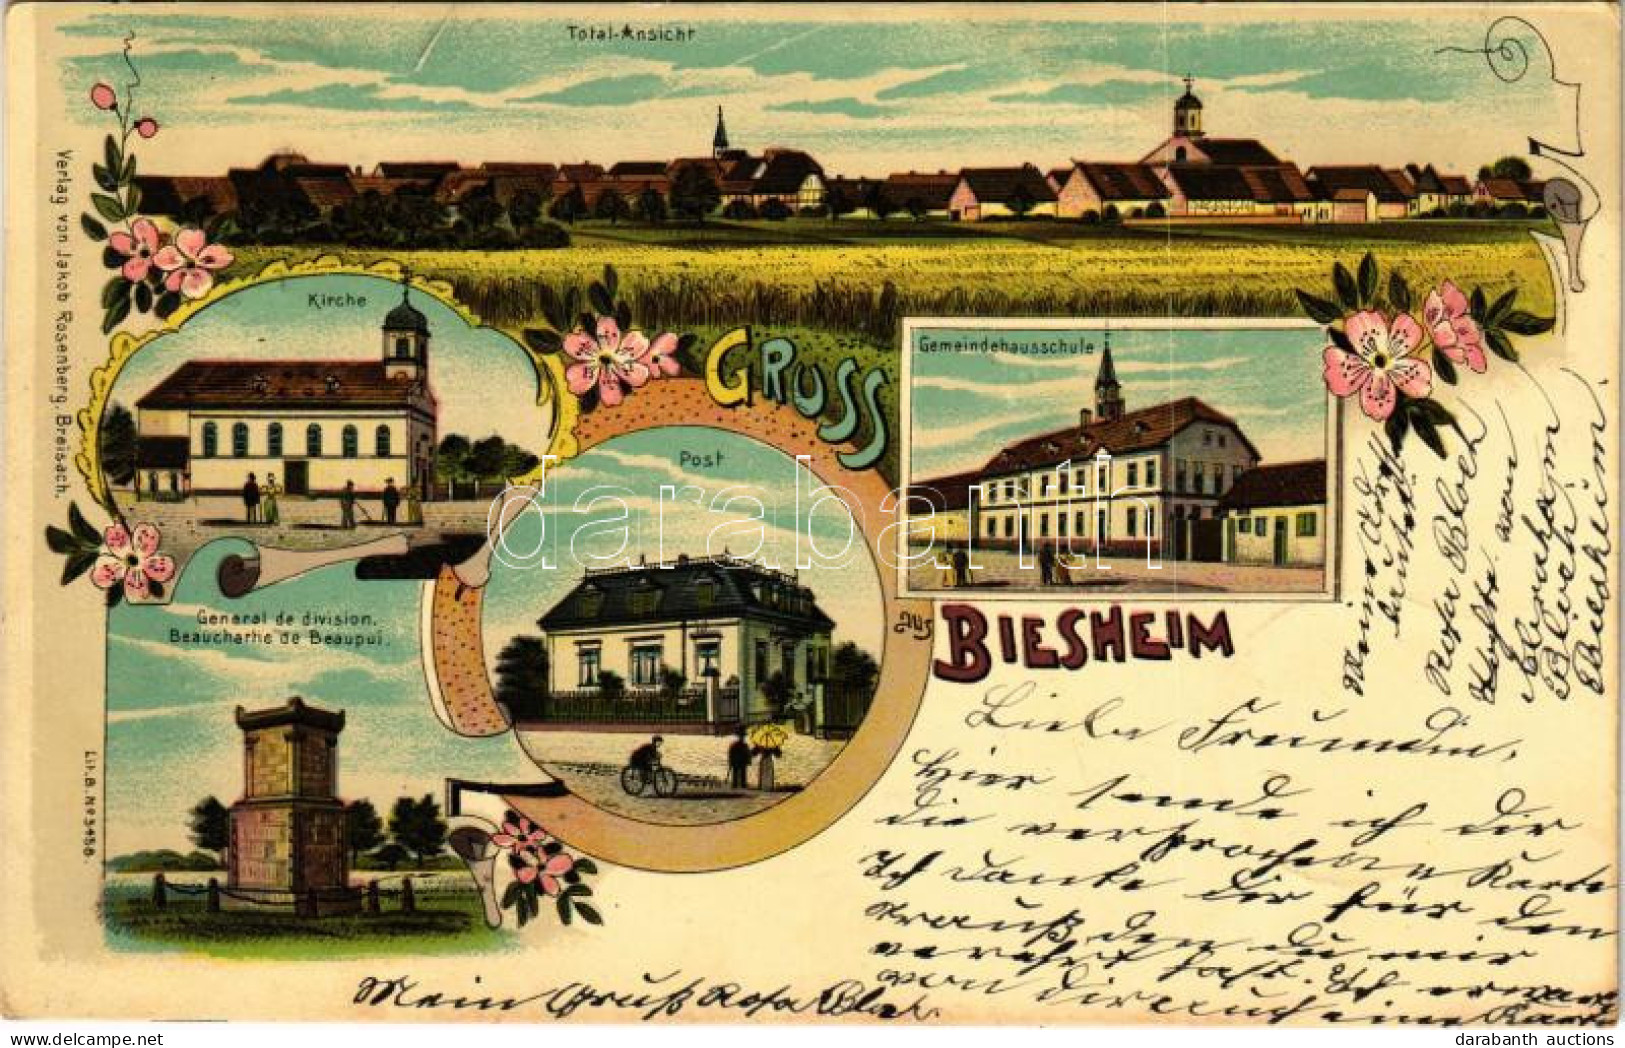 T2/T3 1903 Biesheim, Biese; General De Division. Beauchartie De Beaupui, Kirche, Post, Total Ansicht, Gemeindehausschule - Unclassified